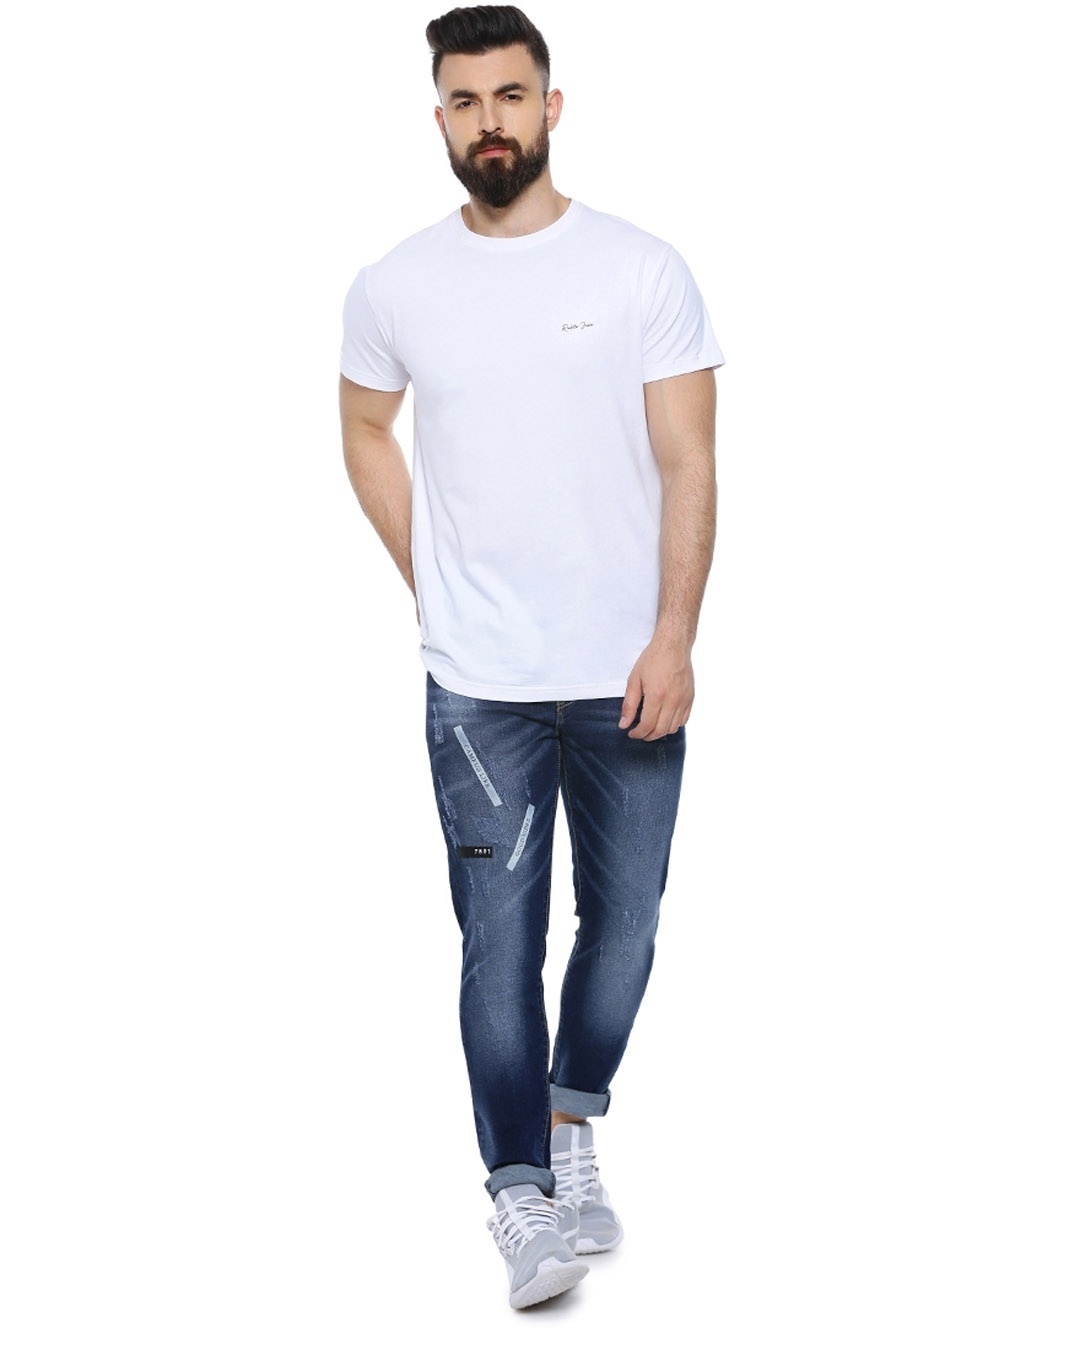 Shop Men's Slim Fit Solid Stretch Stylish New Trends Blue Denim Jeans-Full